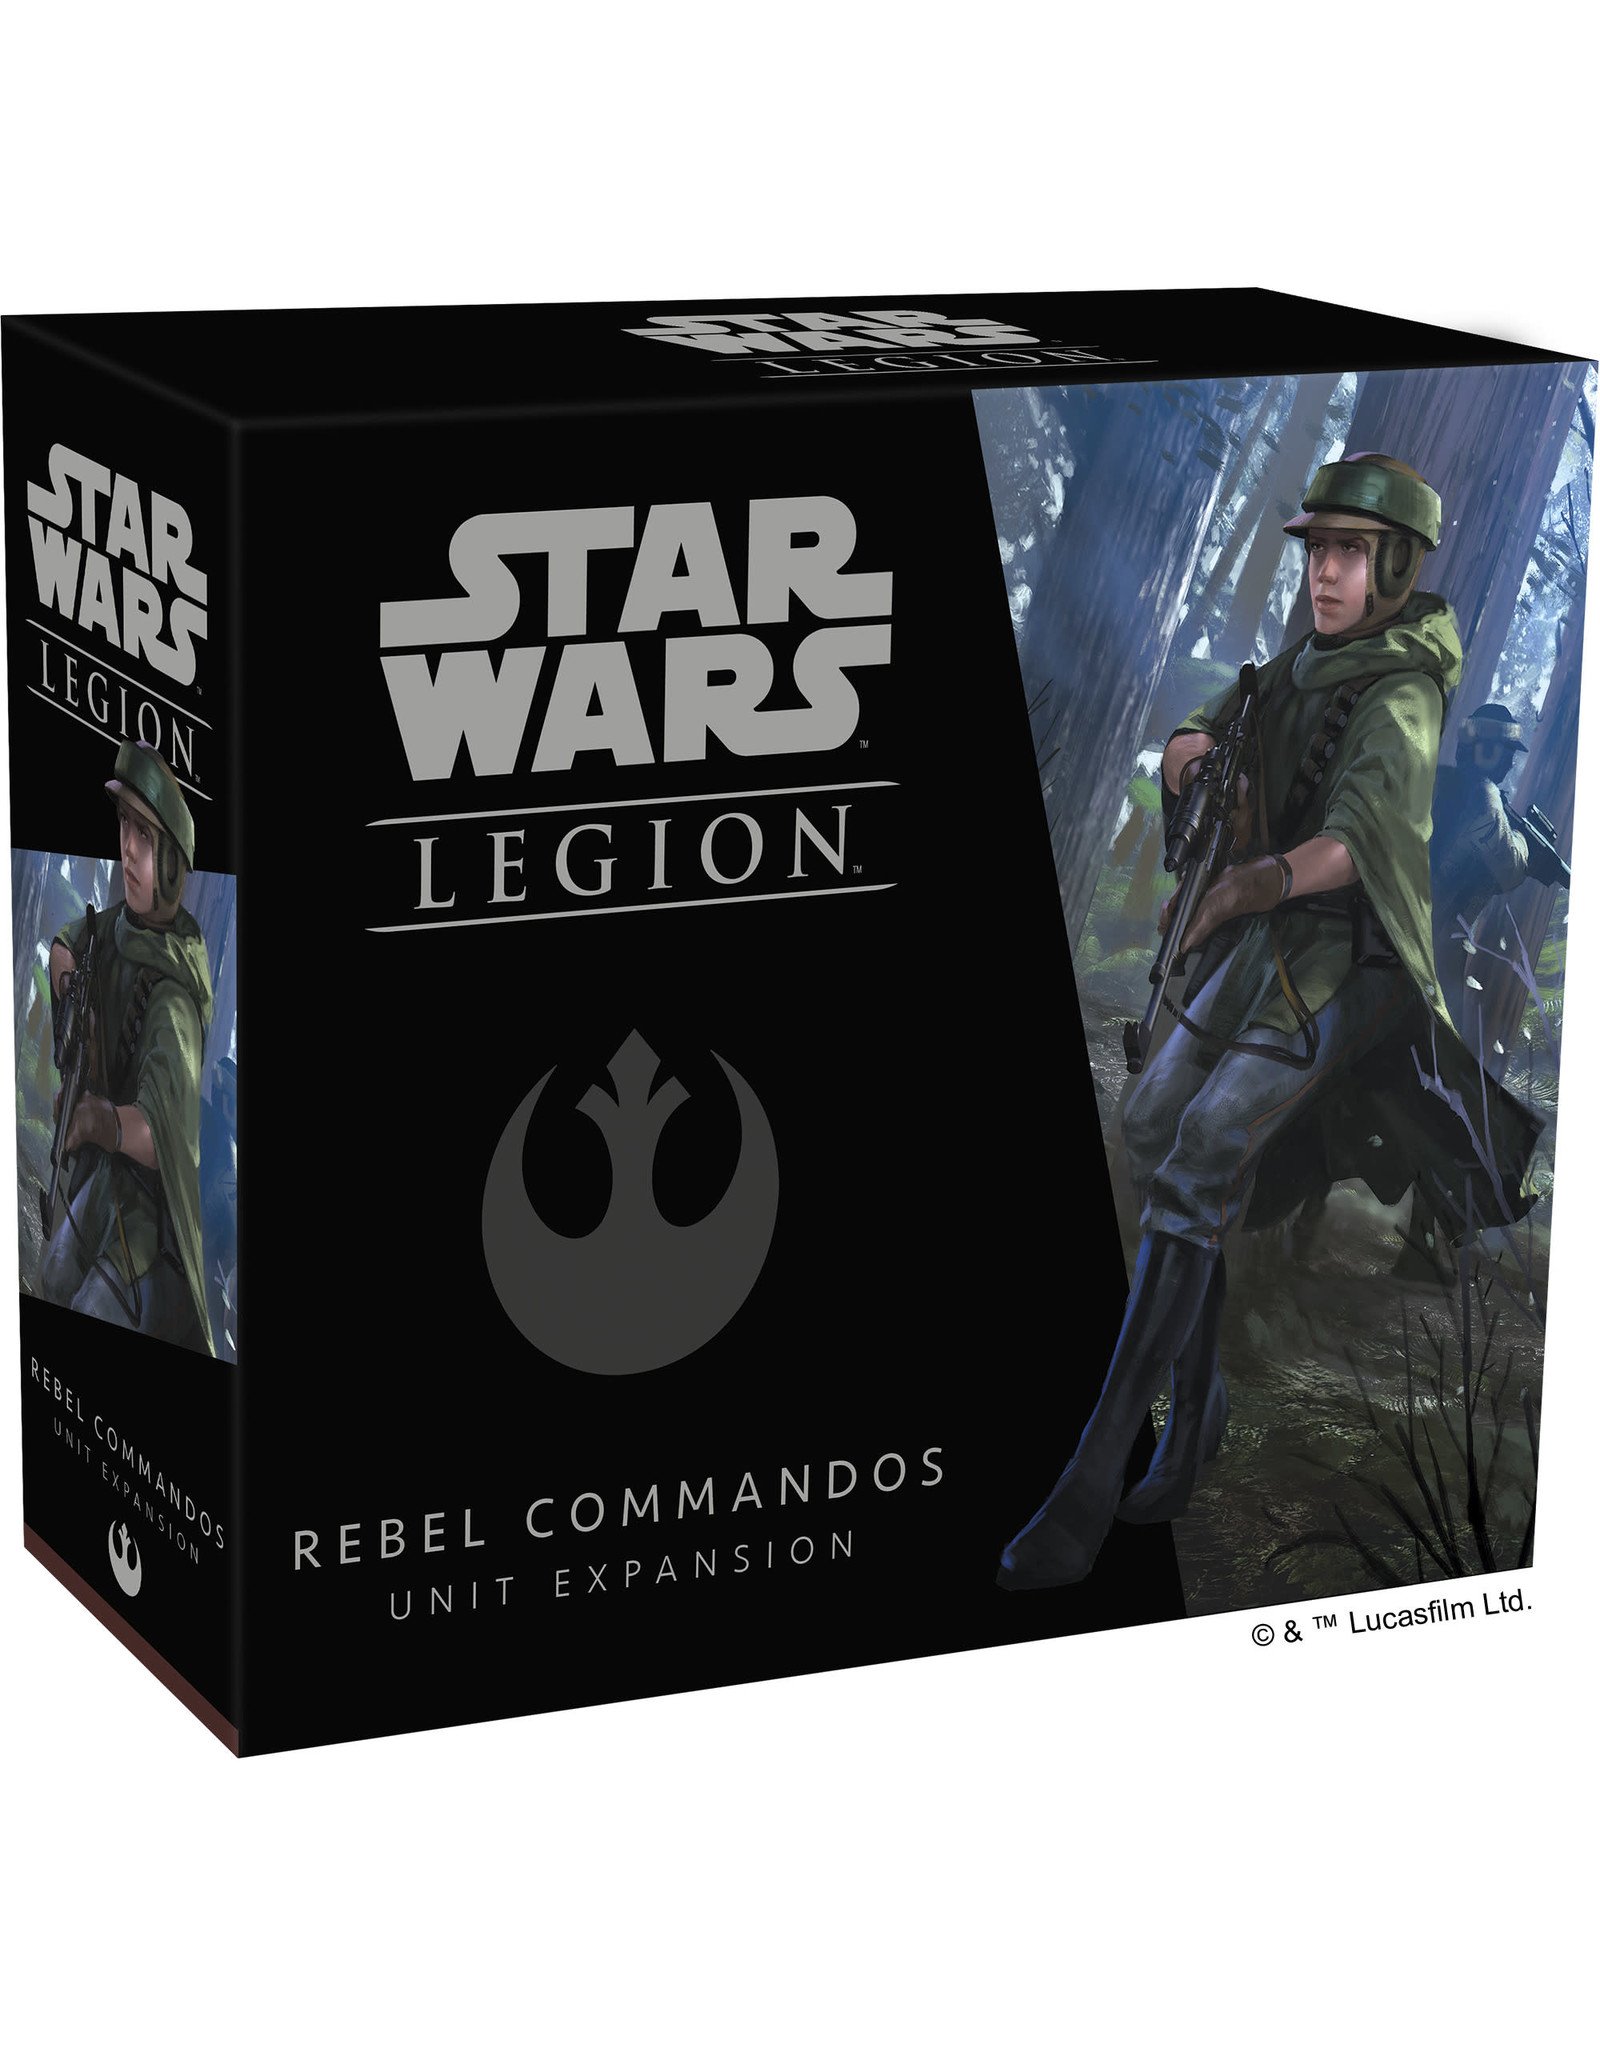 STAR WARS LEGION Star Wars Legion Rebel Commandos Unit Expansion